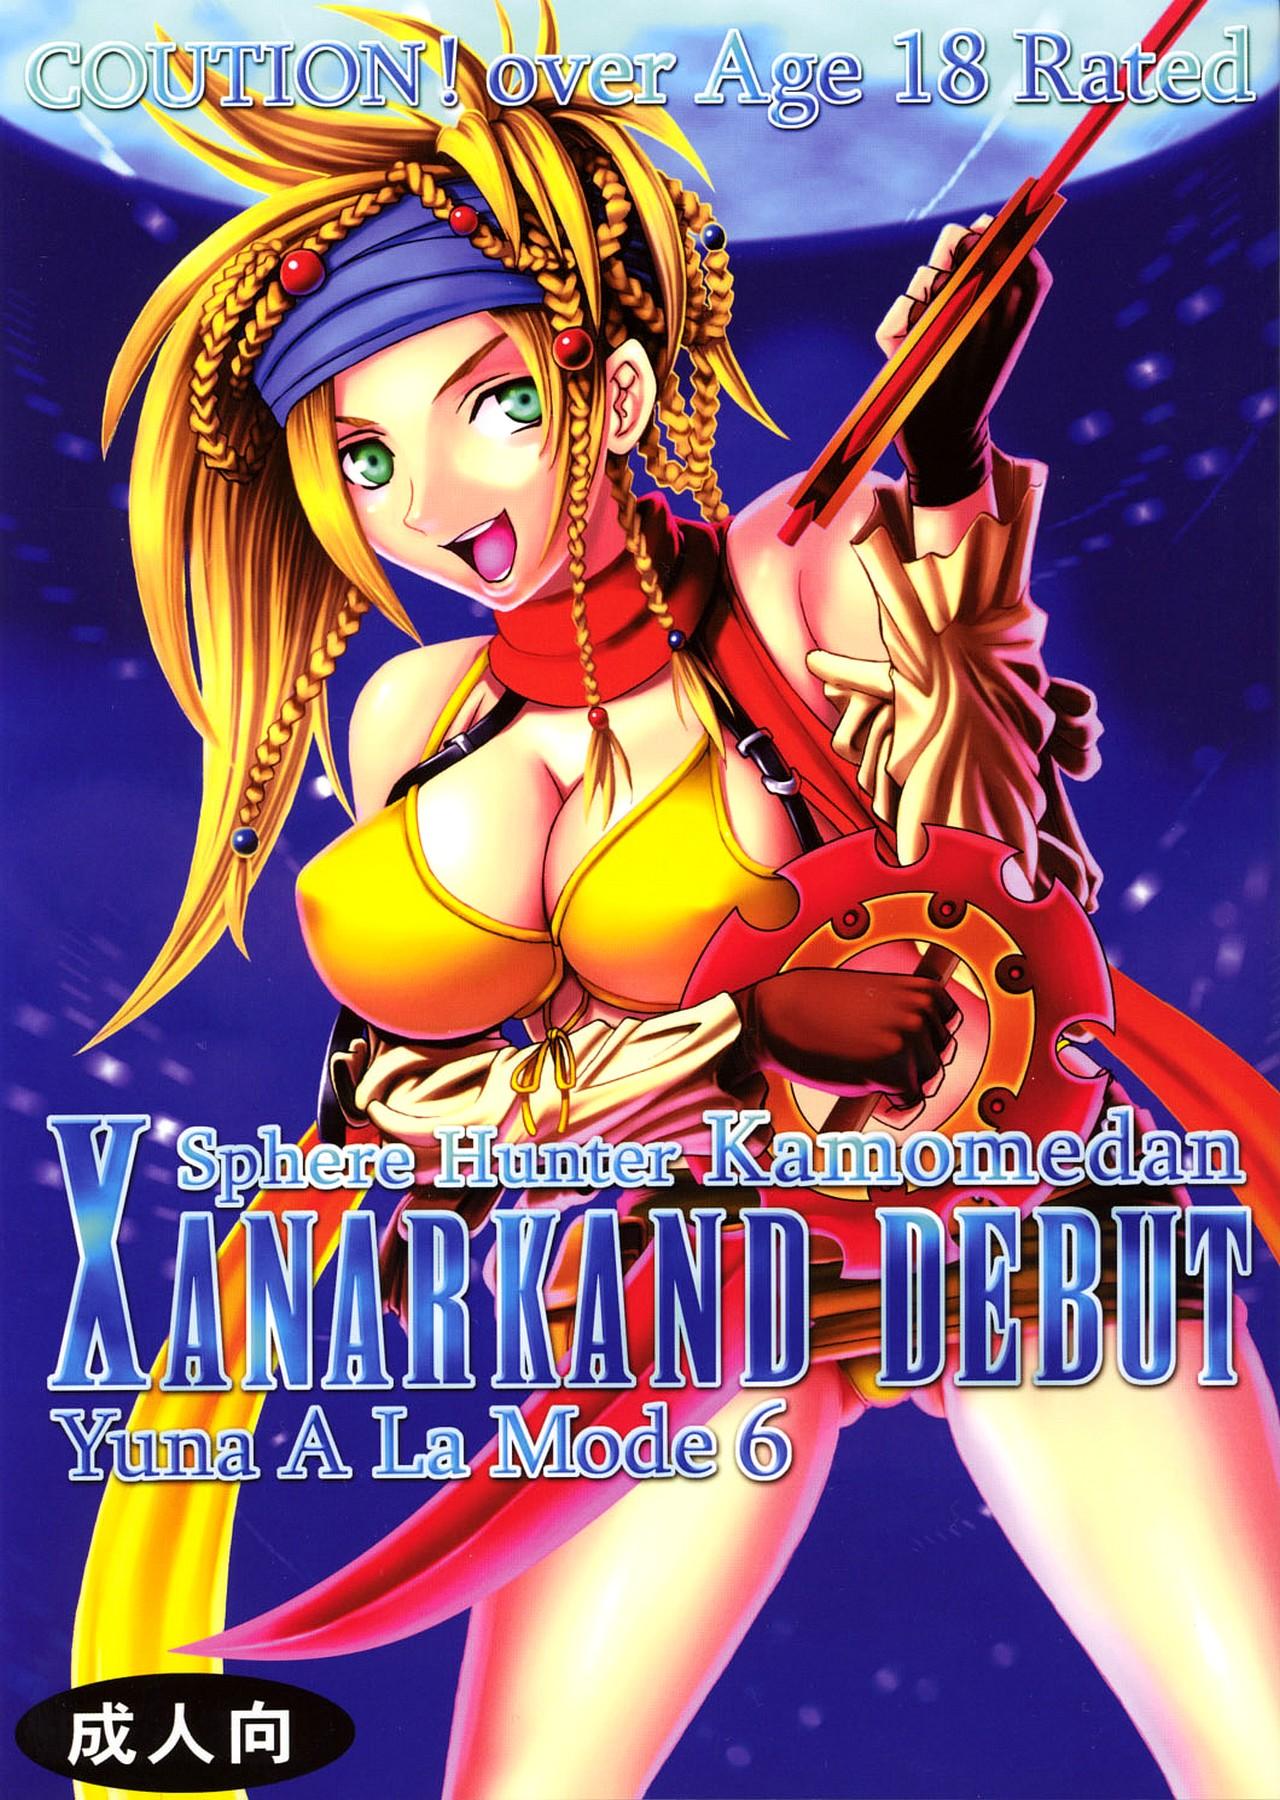 Mms Yuna A La Mode 6 Sphere Hunter Kamomedan XANARKAND DEBUT 2 - Final fantasy x-2 Teenage - Picture 1